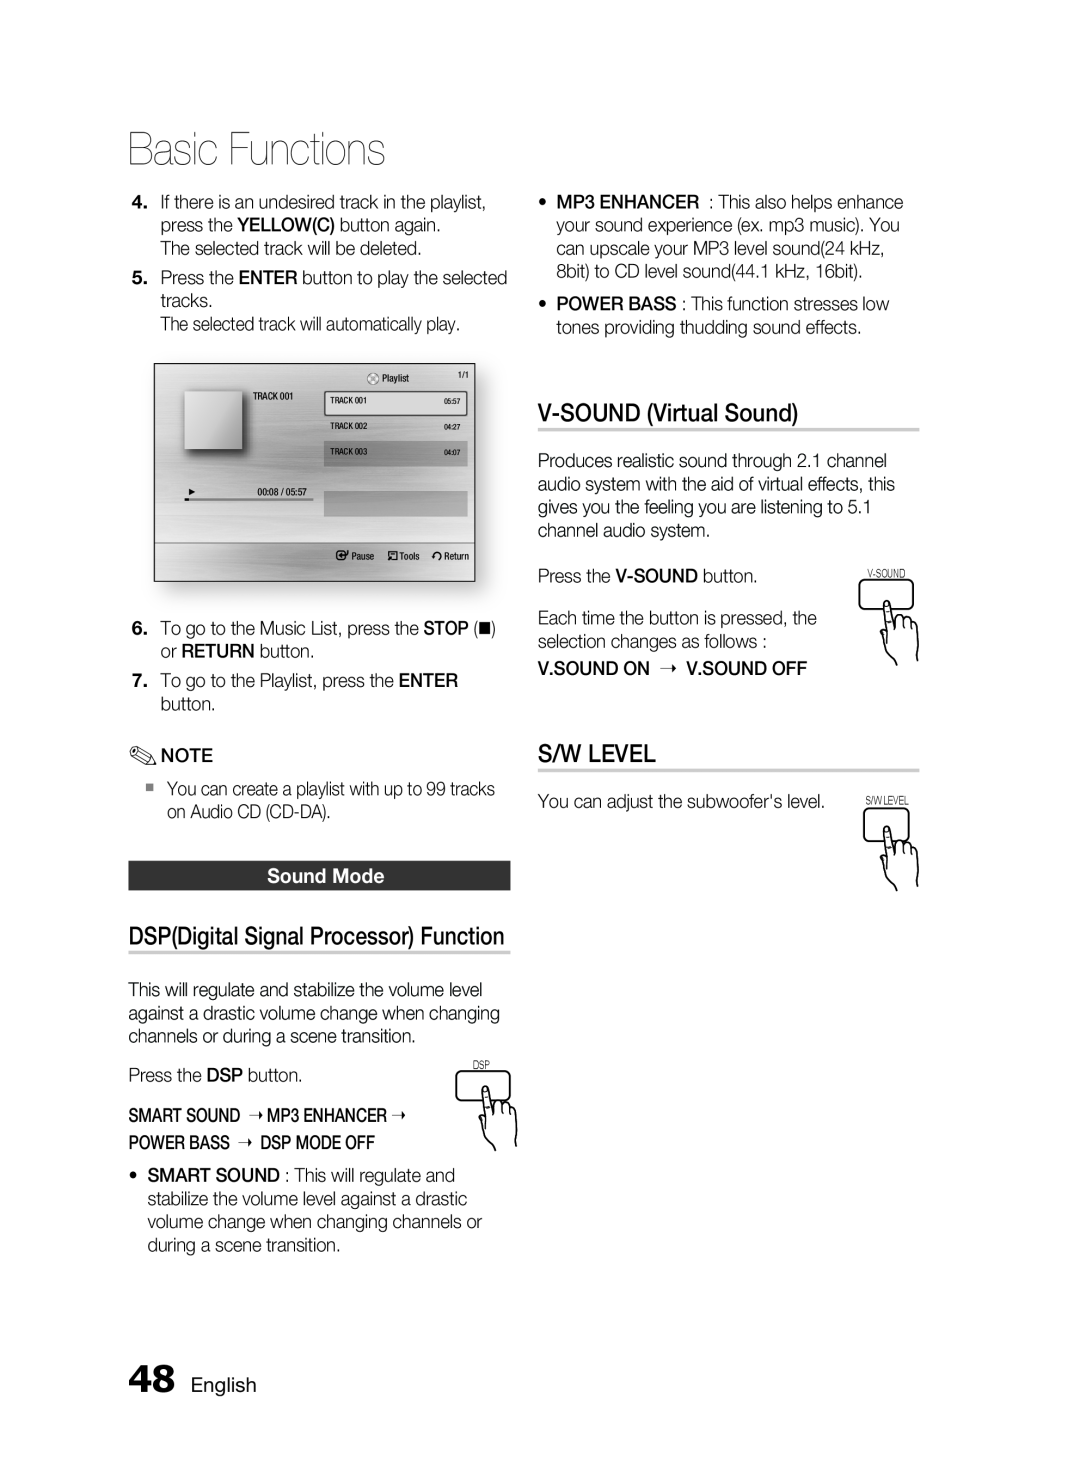 Samsung HT-C5200 user manual V-SOUNDVirtual Sound, S/W Level, DSPDigital Signal Processor Function, Sound Mode, English 